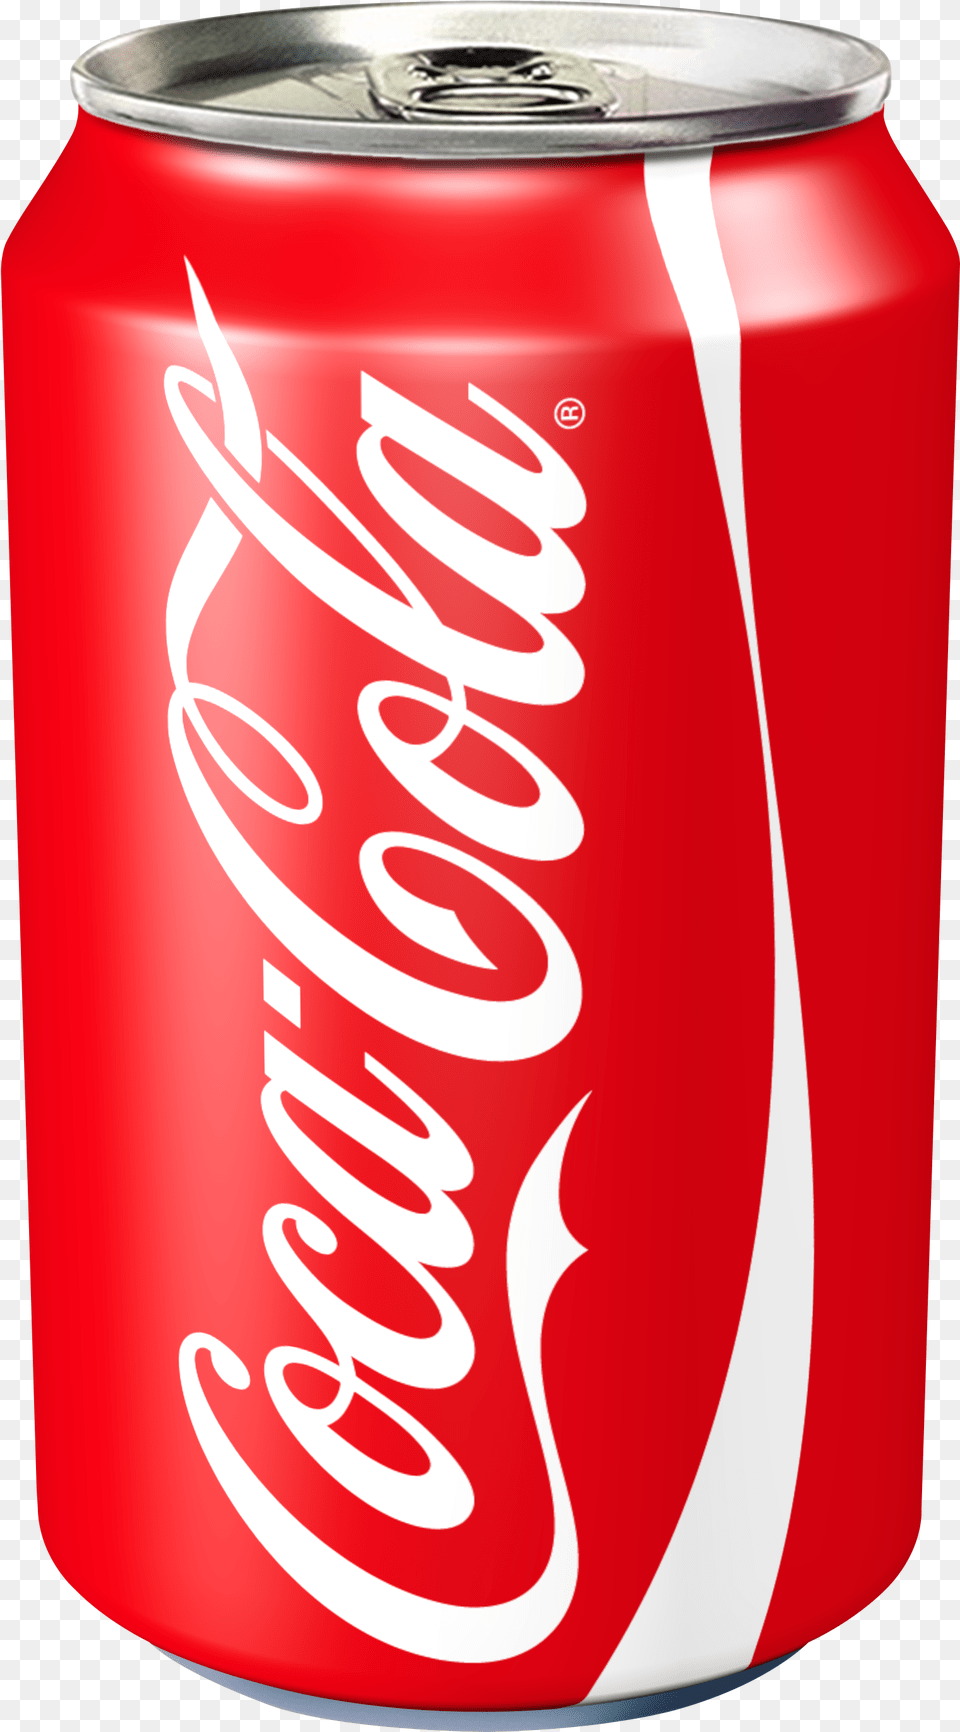 Coca Cola Can Image Coca Cola Can, Beverage, Coke, Soda, Tin Free Transparent Png